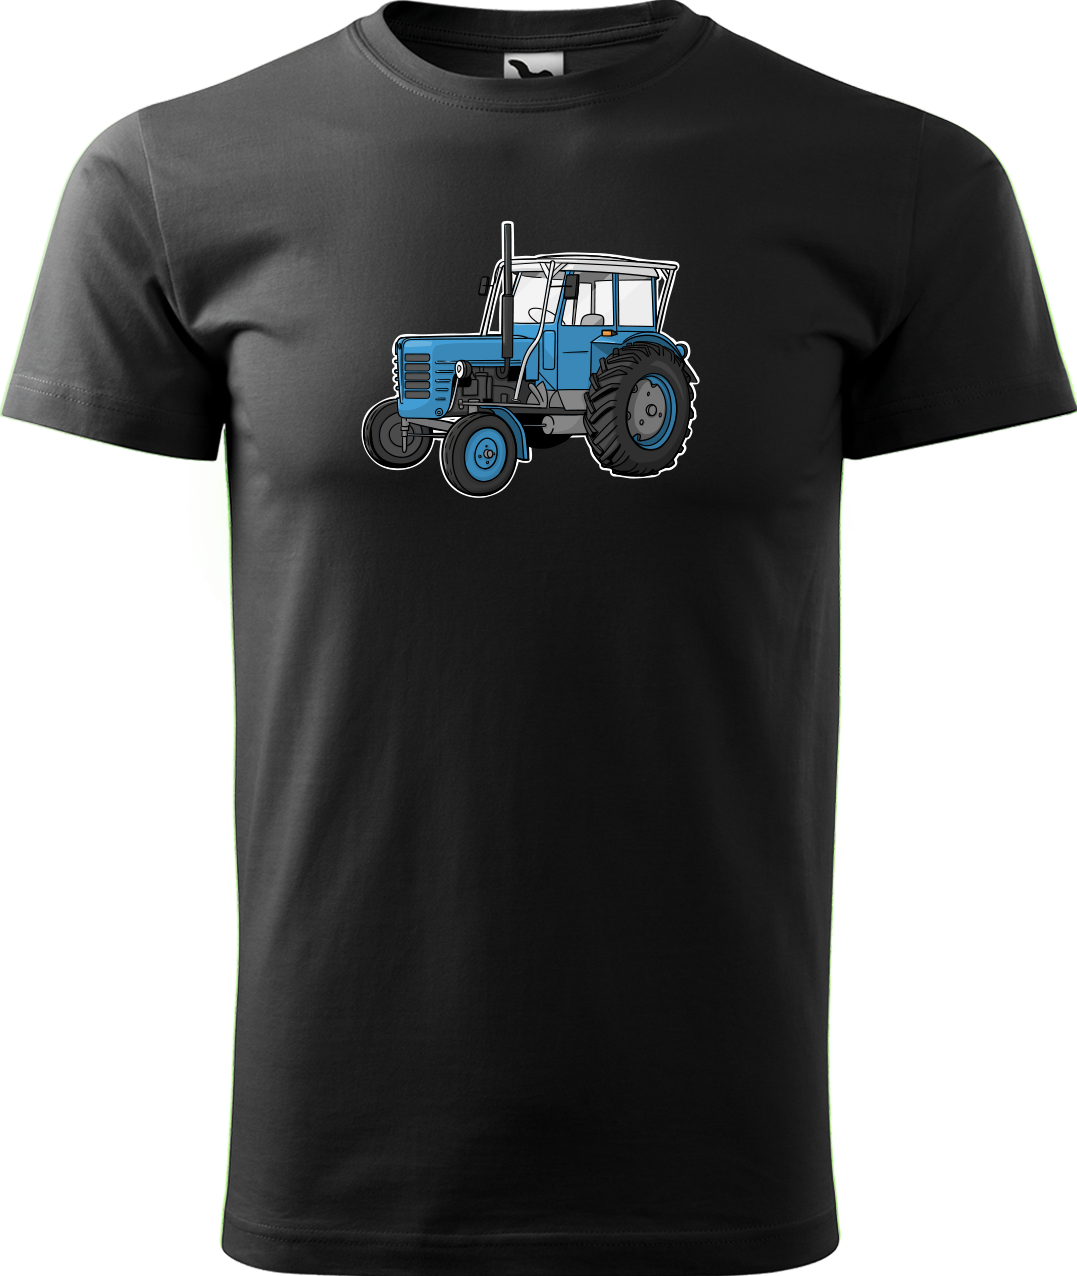 Tričko s traktorem - Starý traktor Velikost: M, Barva: Černá (01)